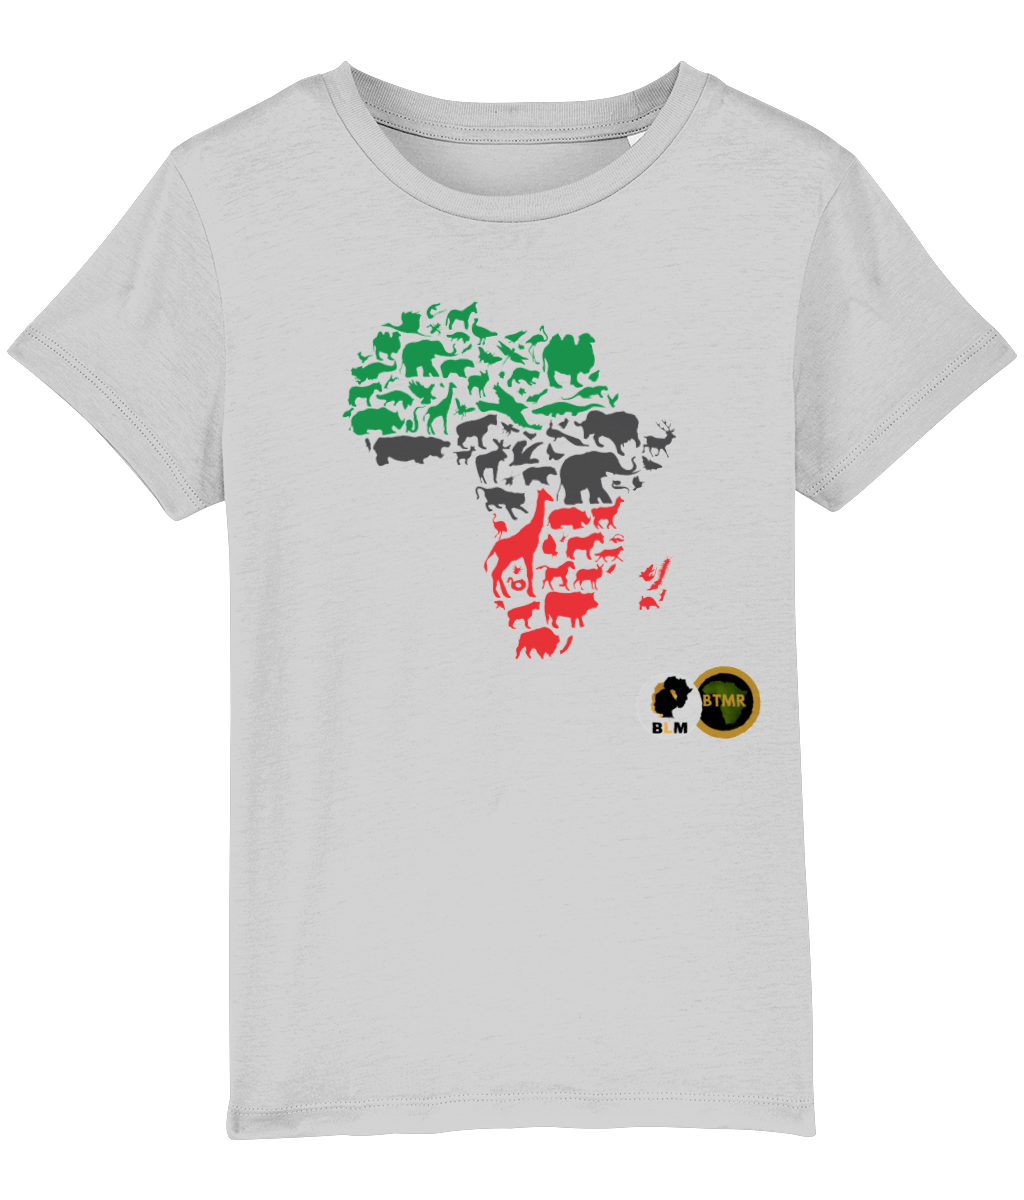 BTMR Animal Africa Unisex Kids T Shirt